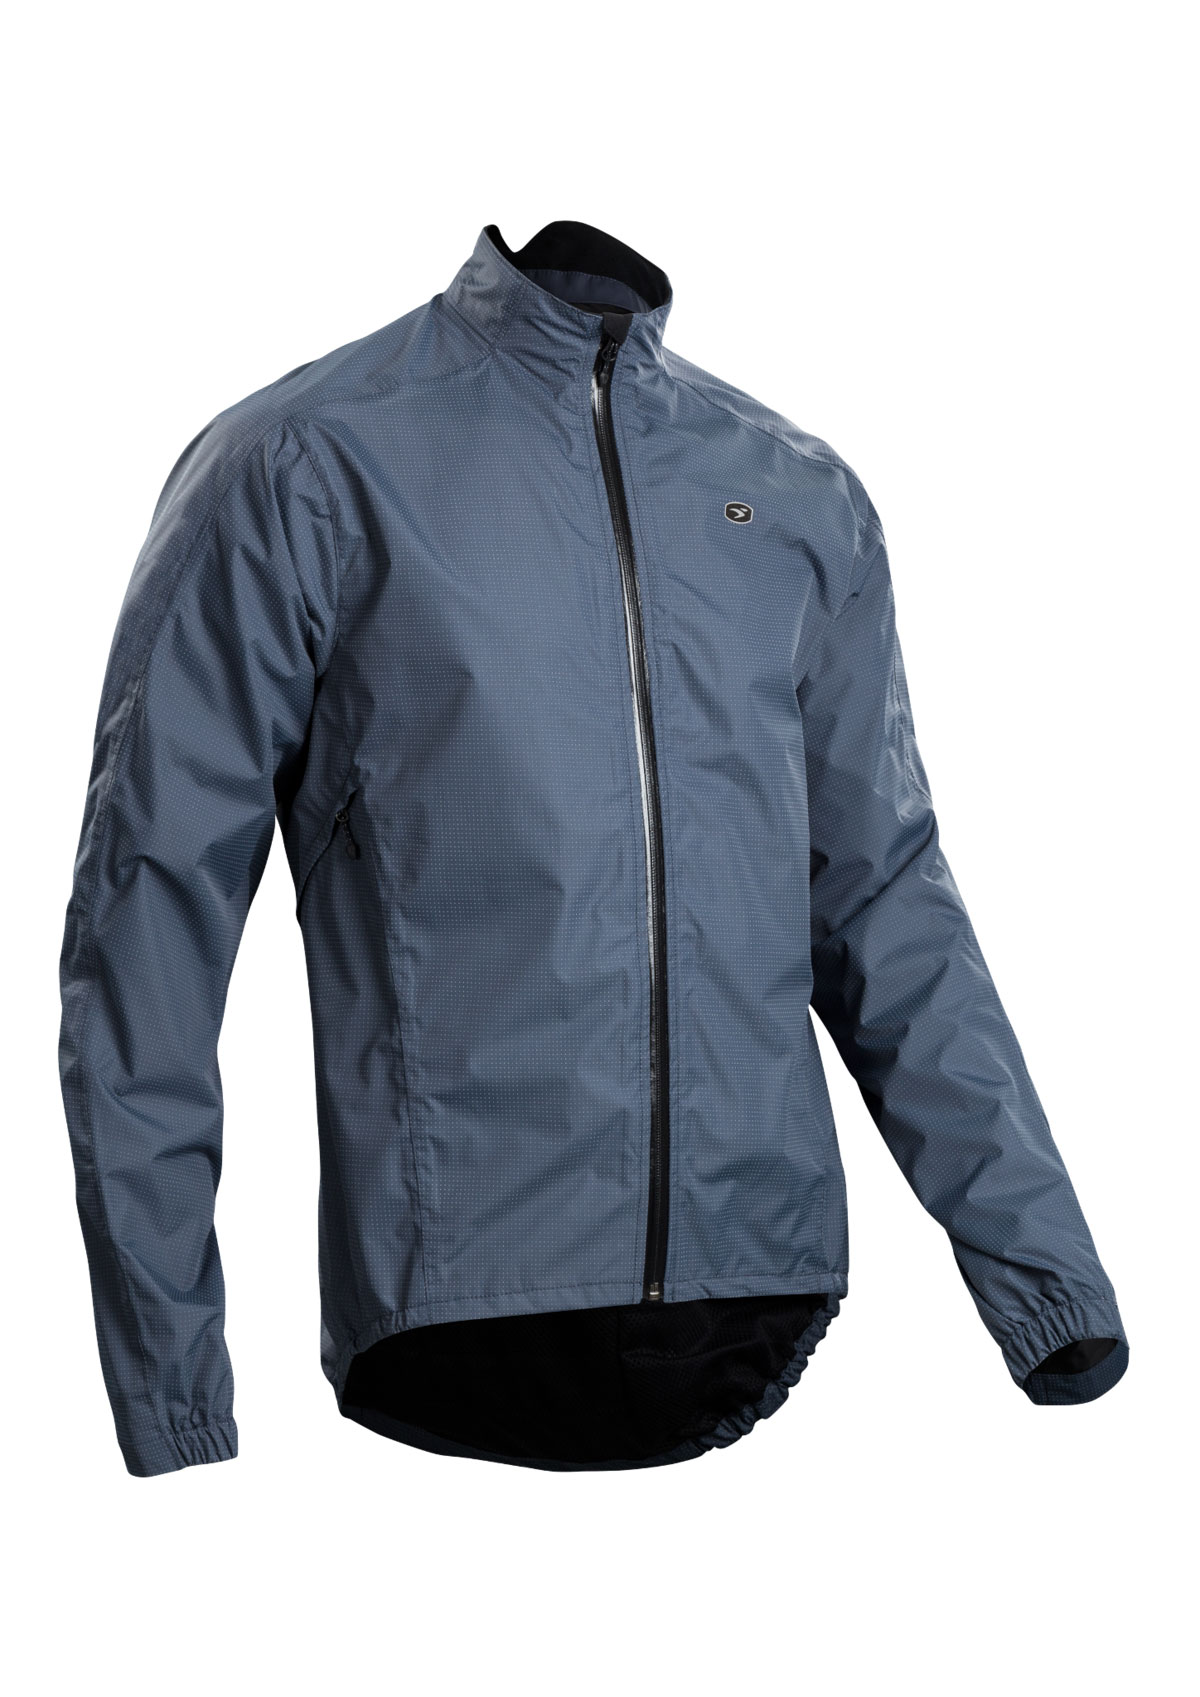 Куртка Sugoi ZAP BIKE, светоотражающая ткань, мужская, GRY (серая), L